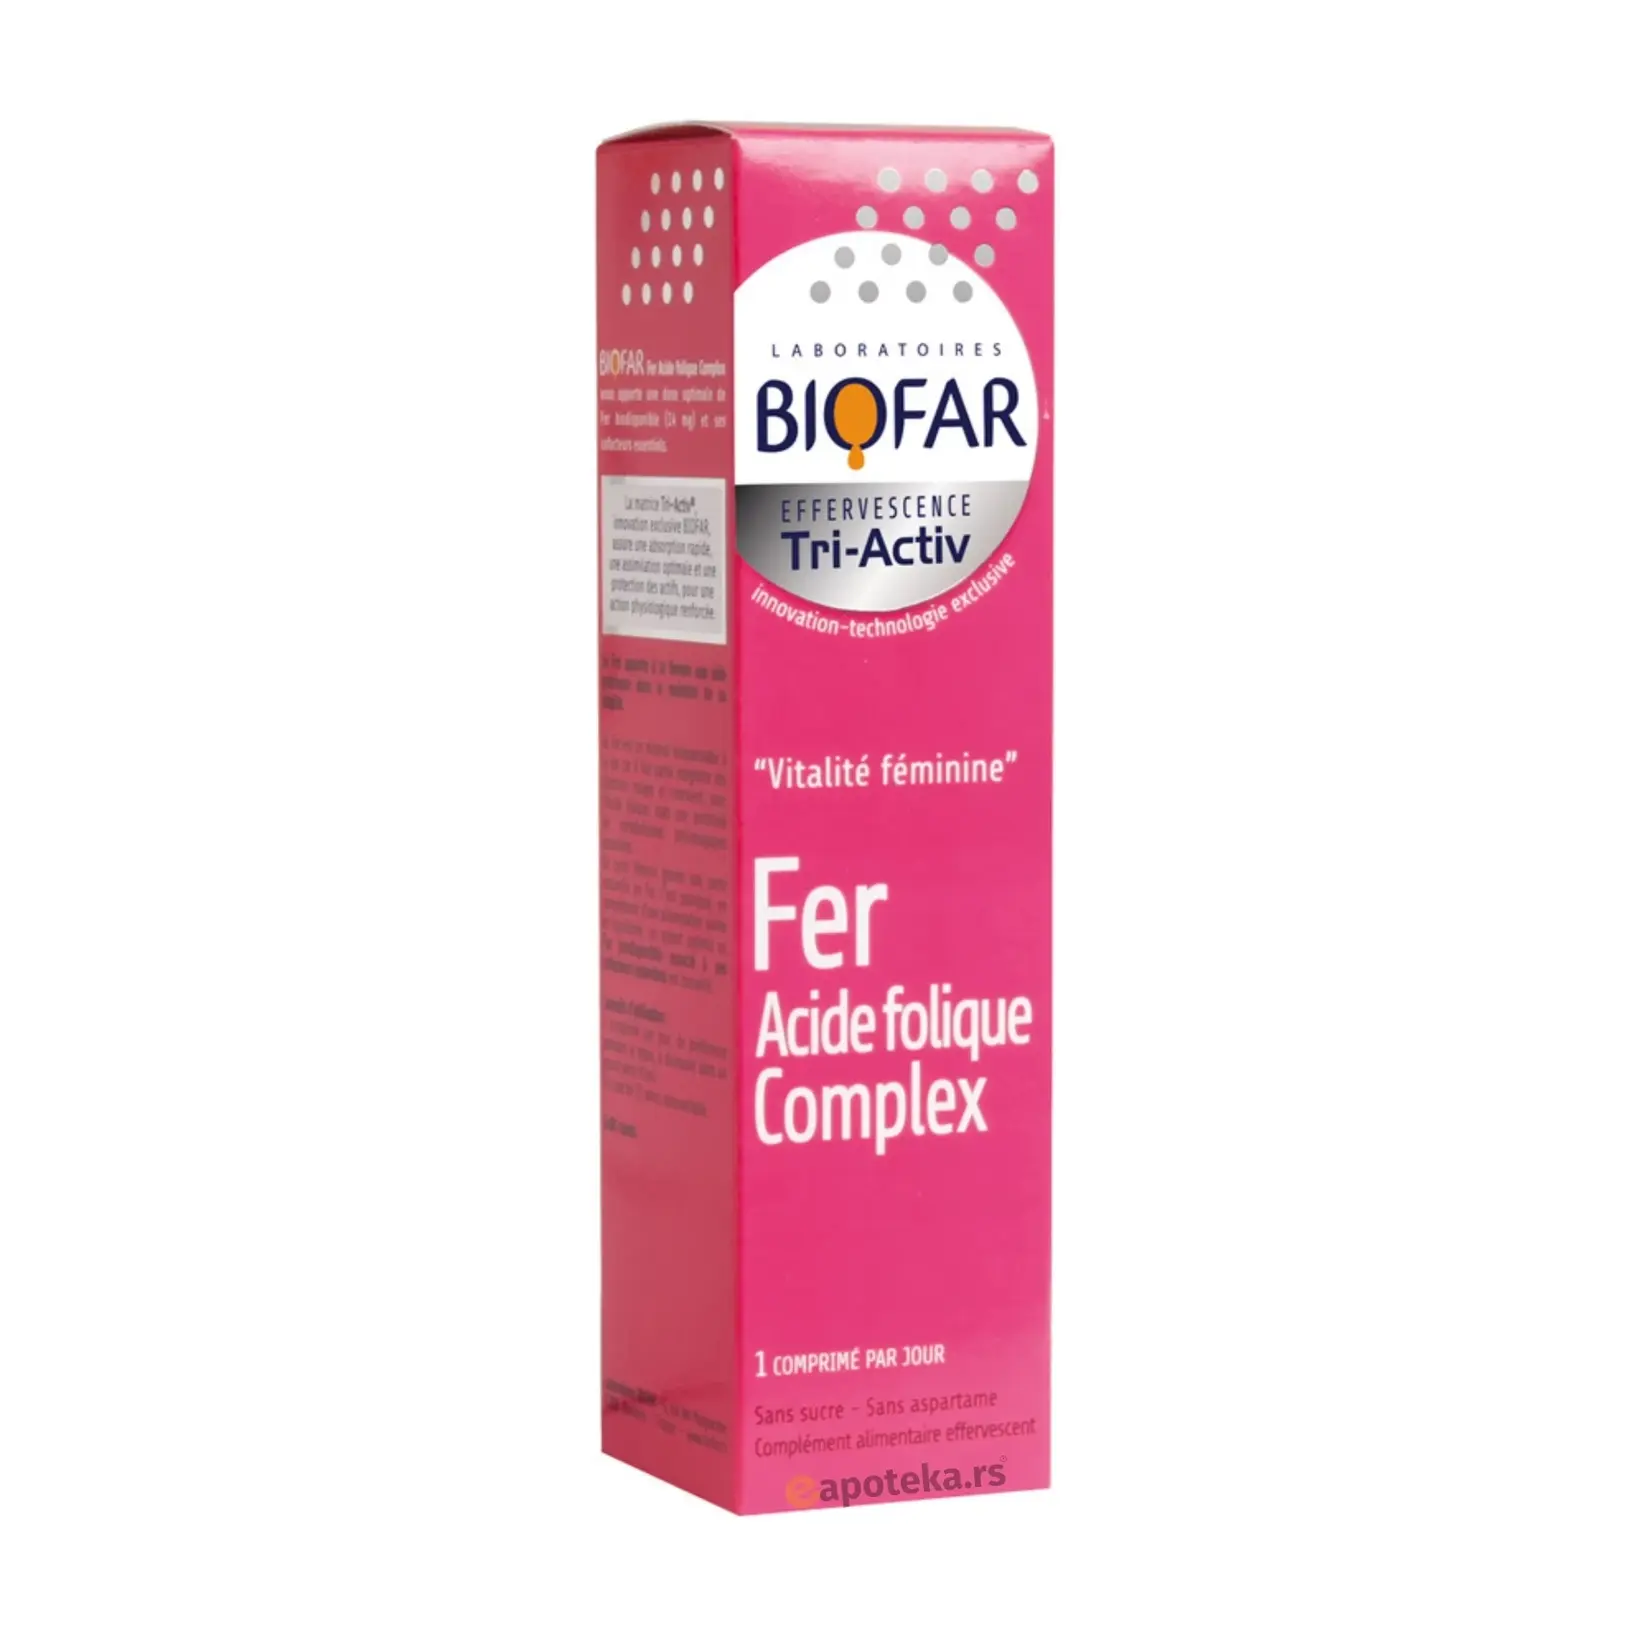 Selected image for BIOFAR Tri-aktiv Fer Acide Folique Complex 100170